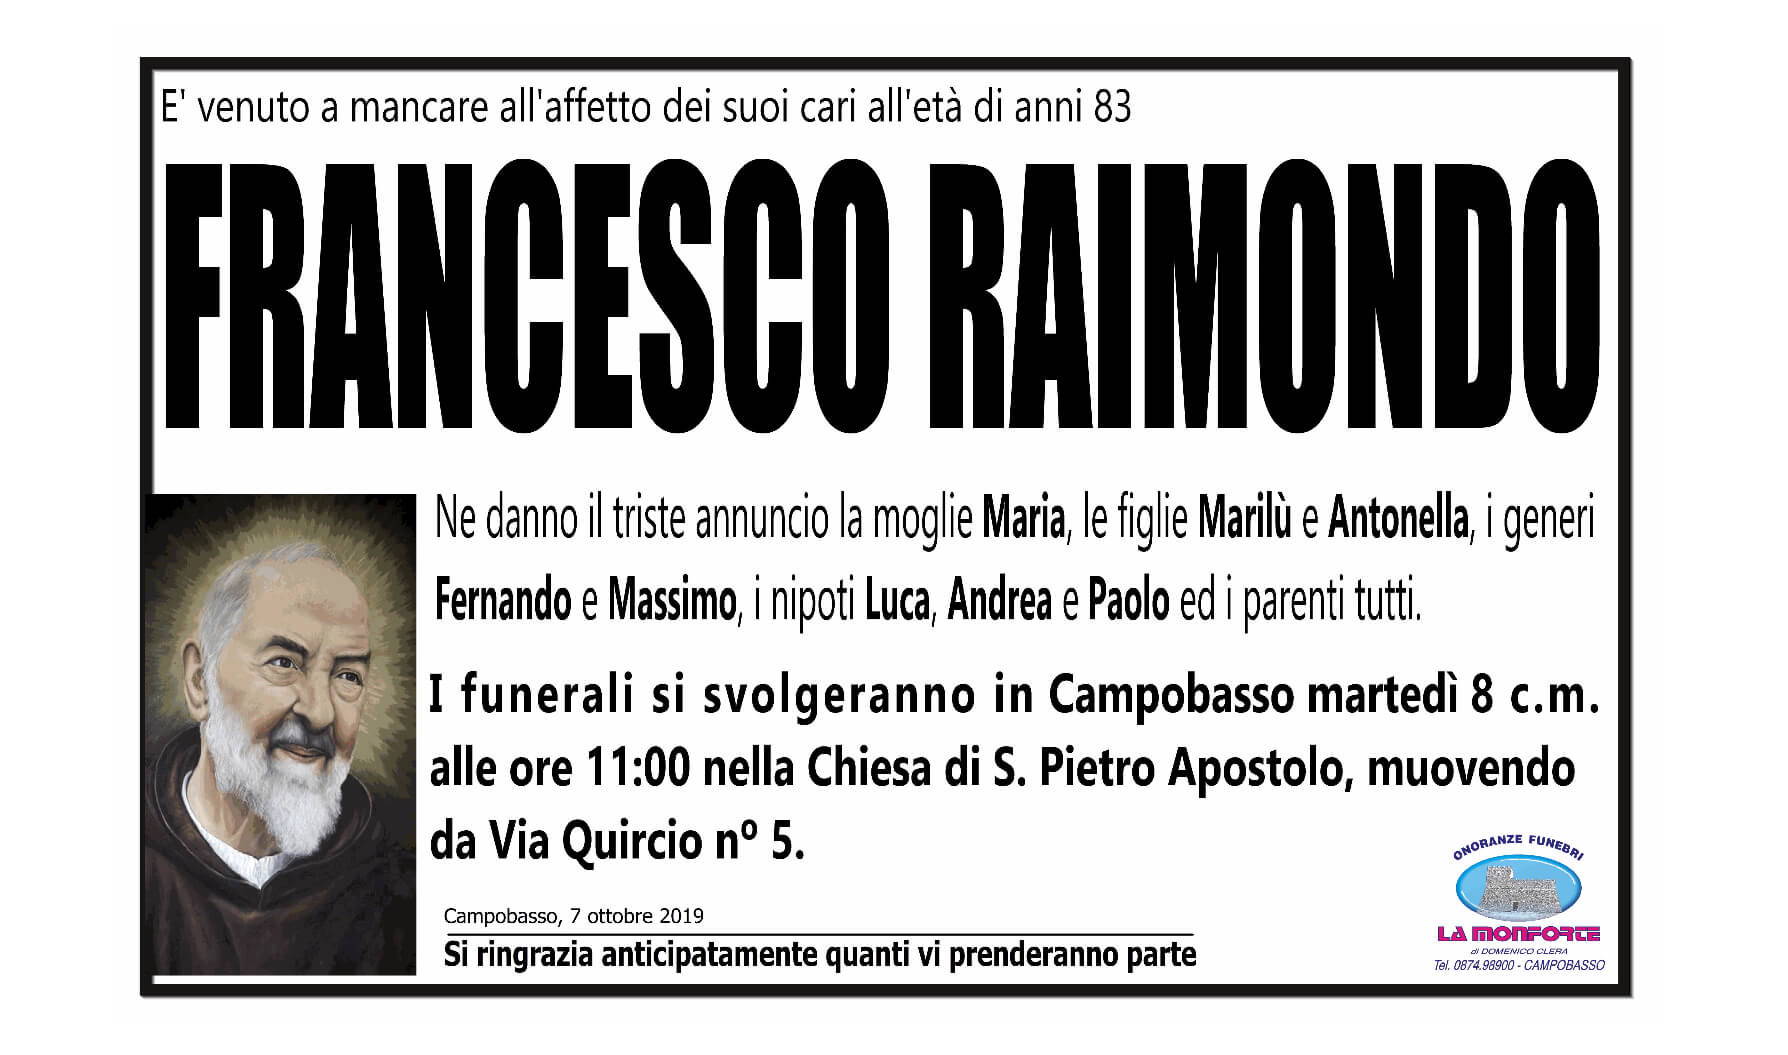 Francesco Raimondi